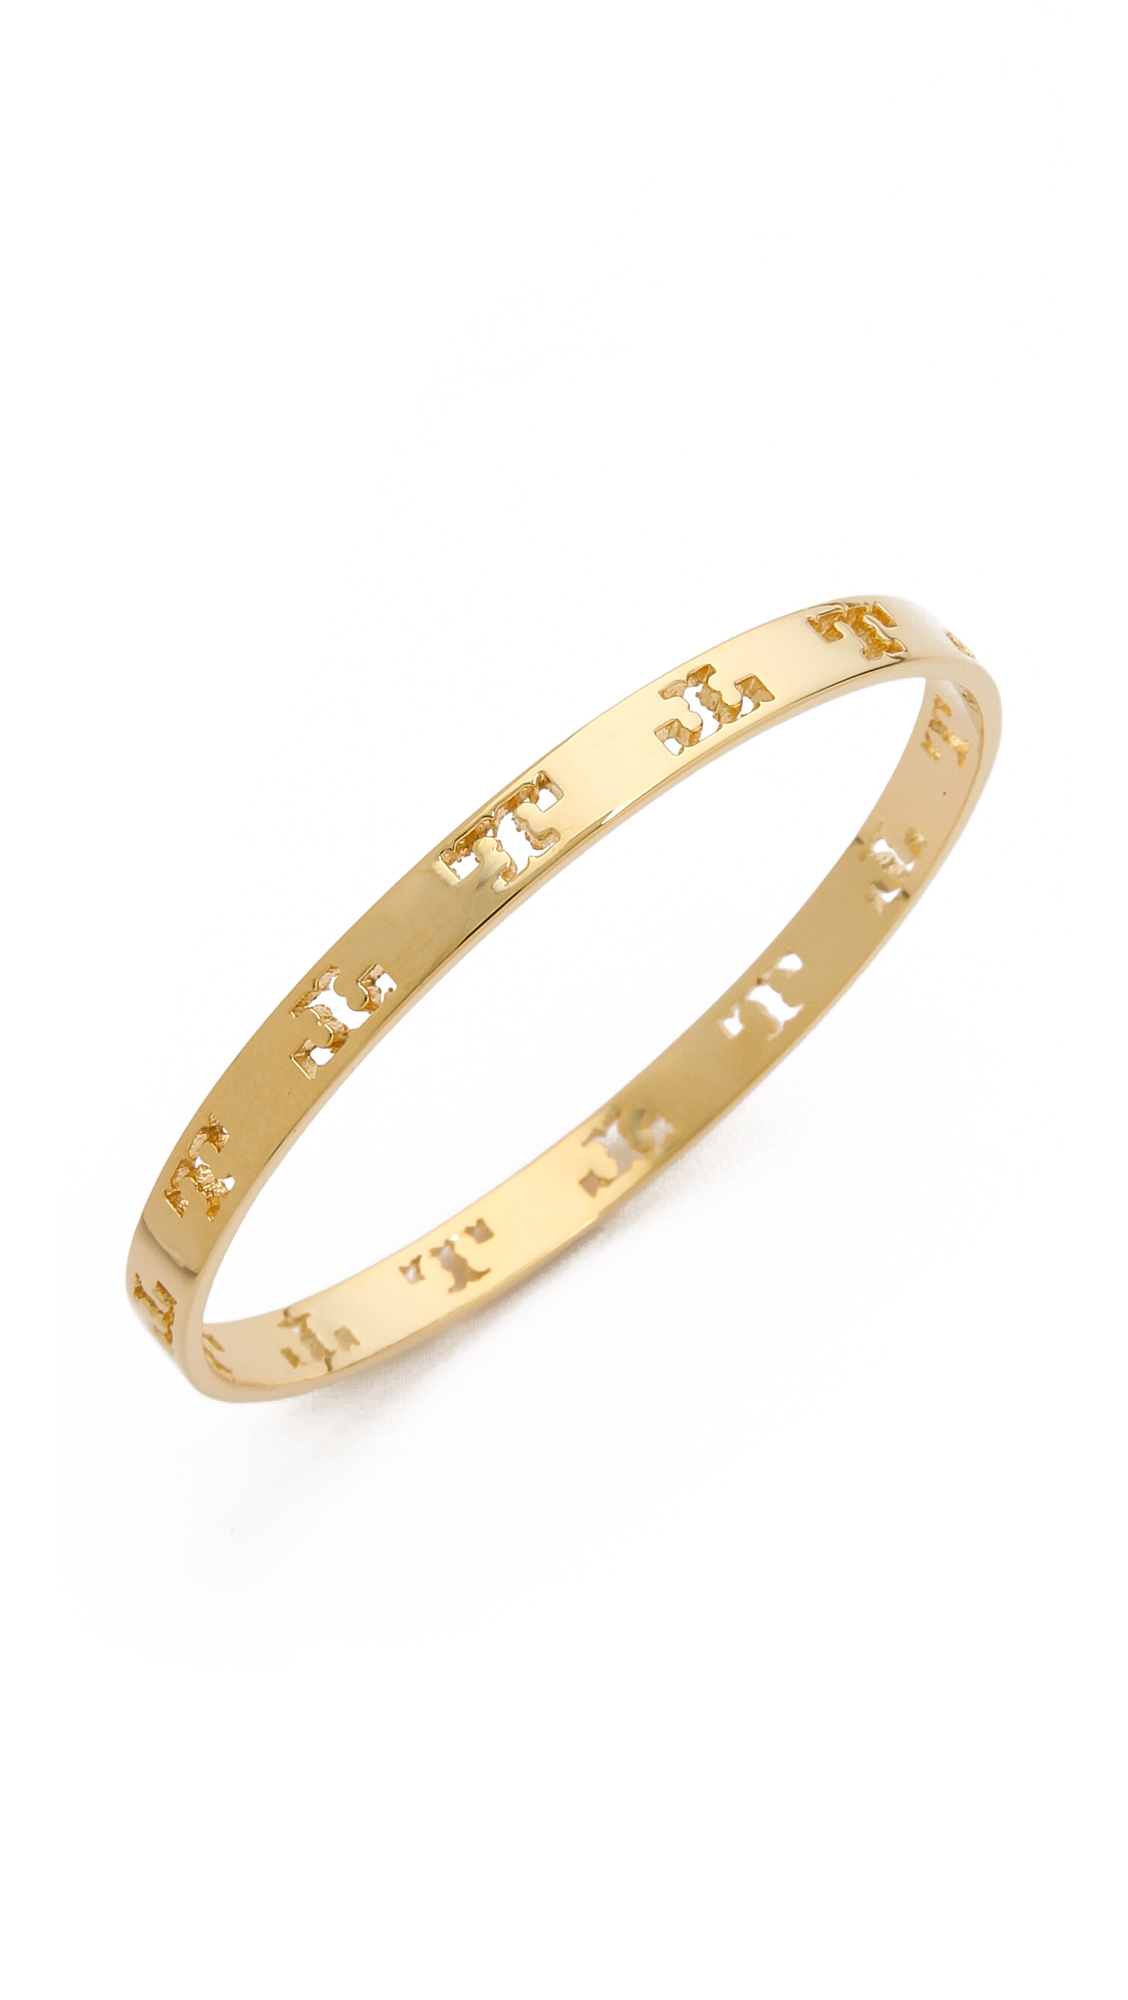 Lyst - Tory Burch Pierced T Bangle Bracelet - Shiny Gold in Metallic